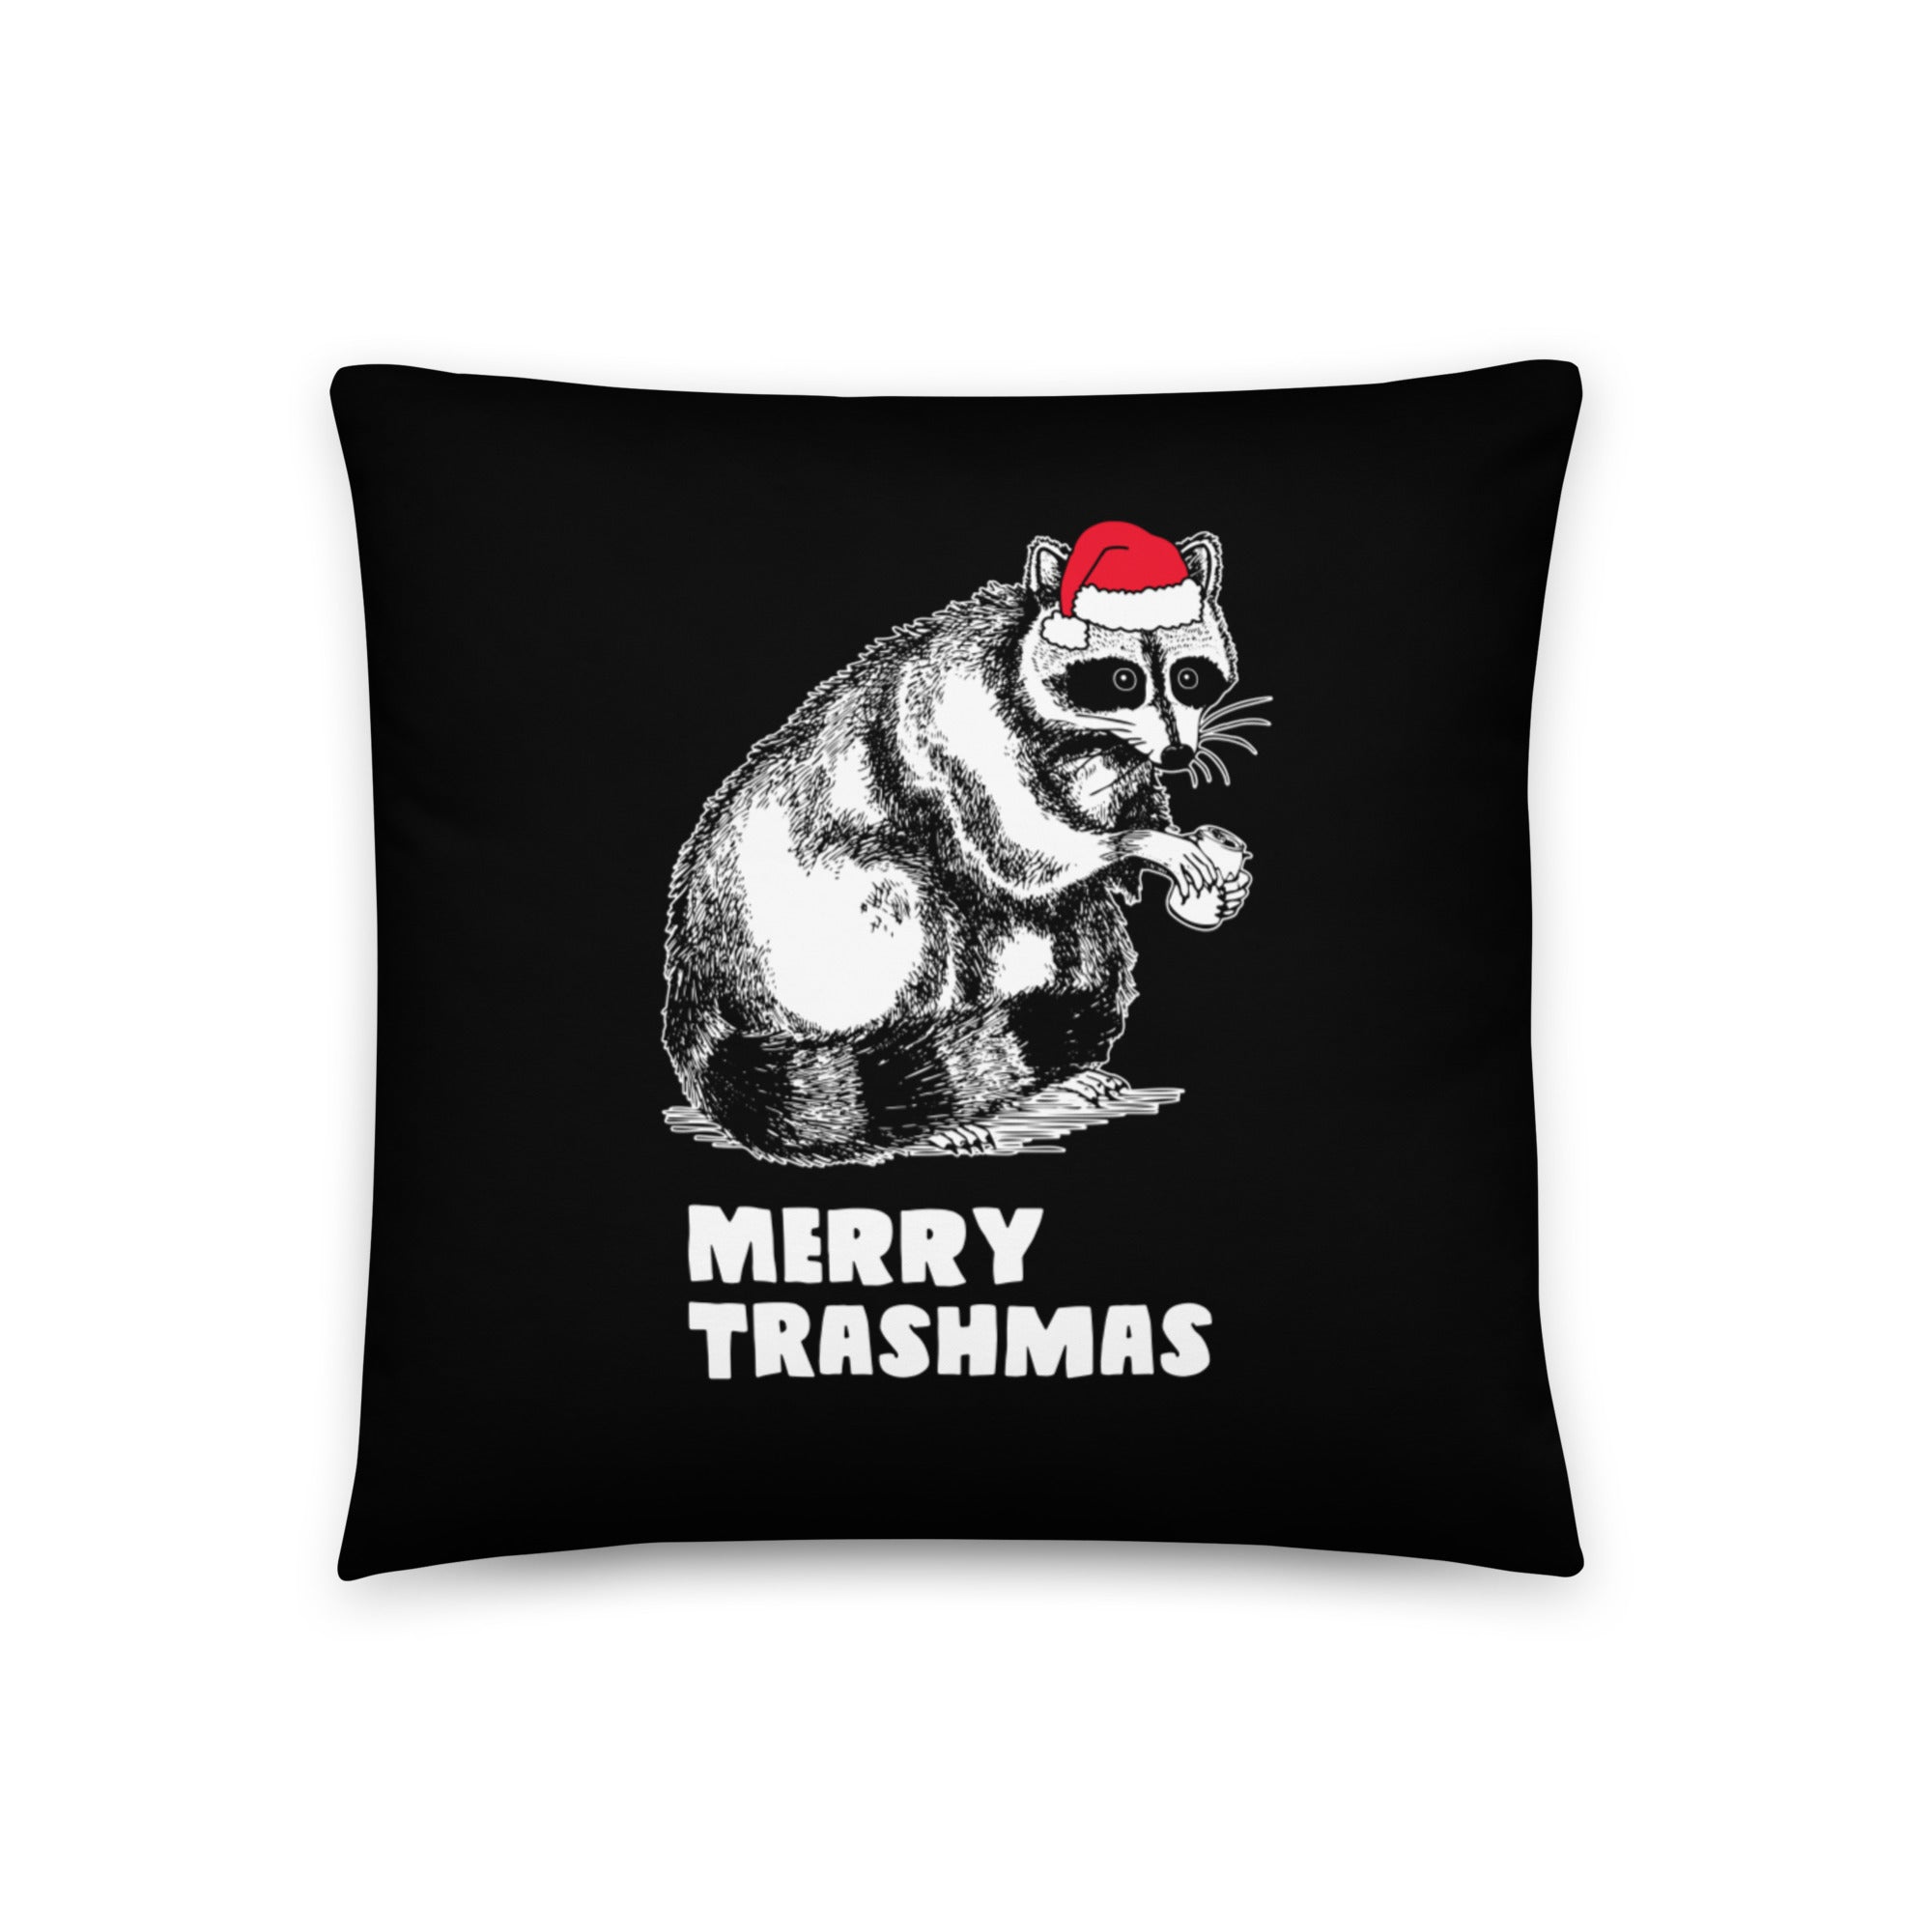 Merry Trashmas Pillow